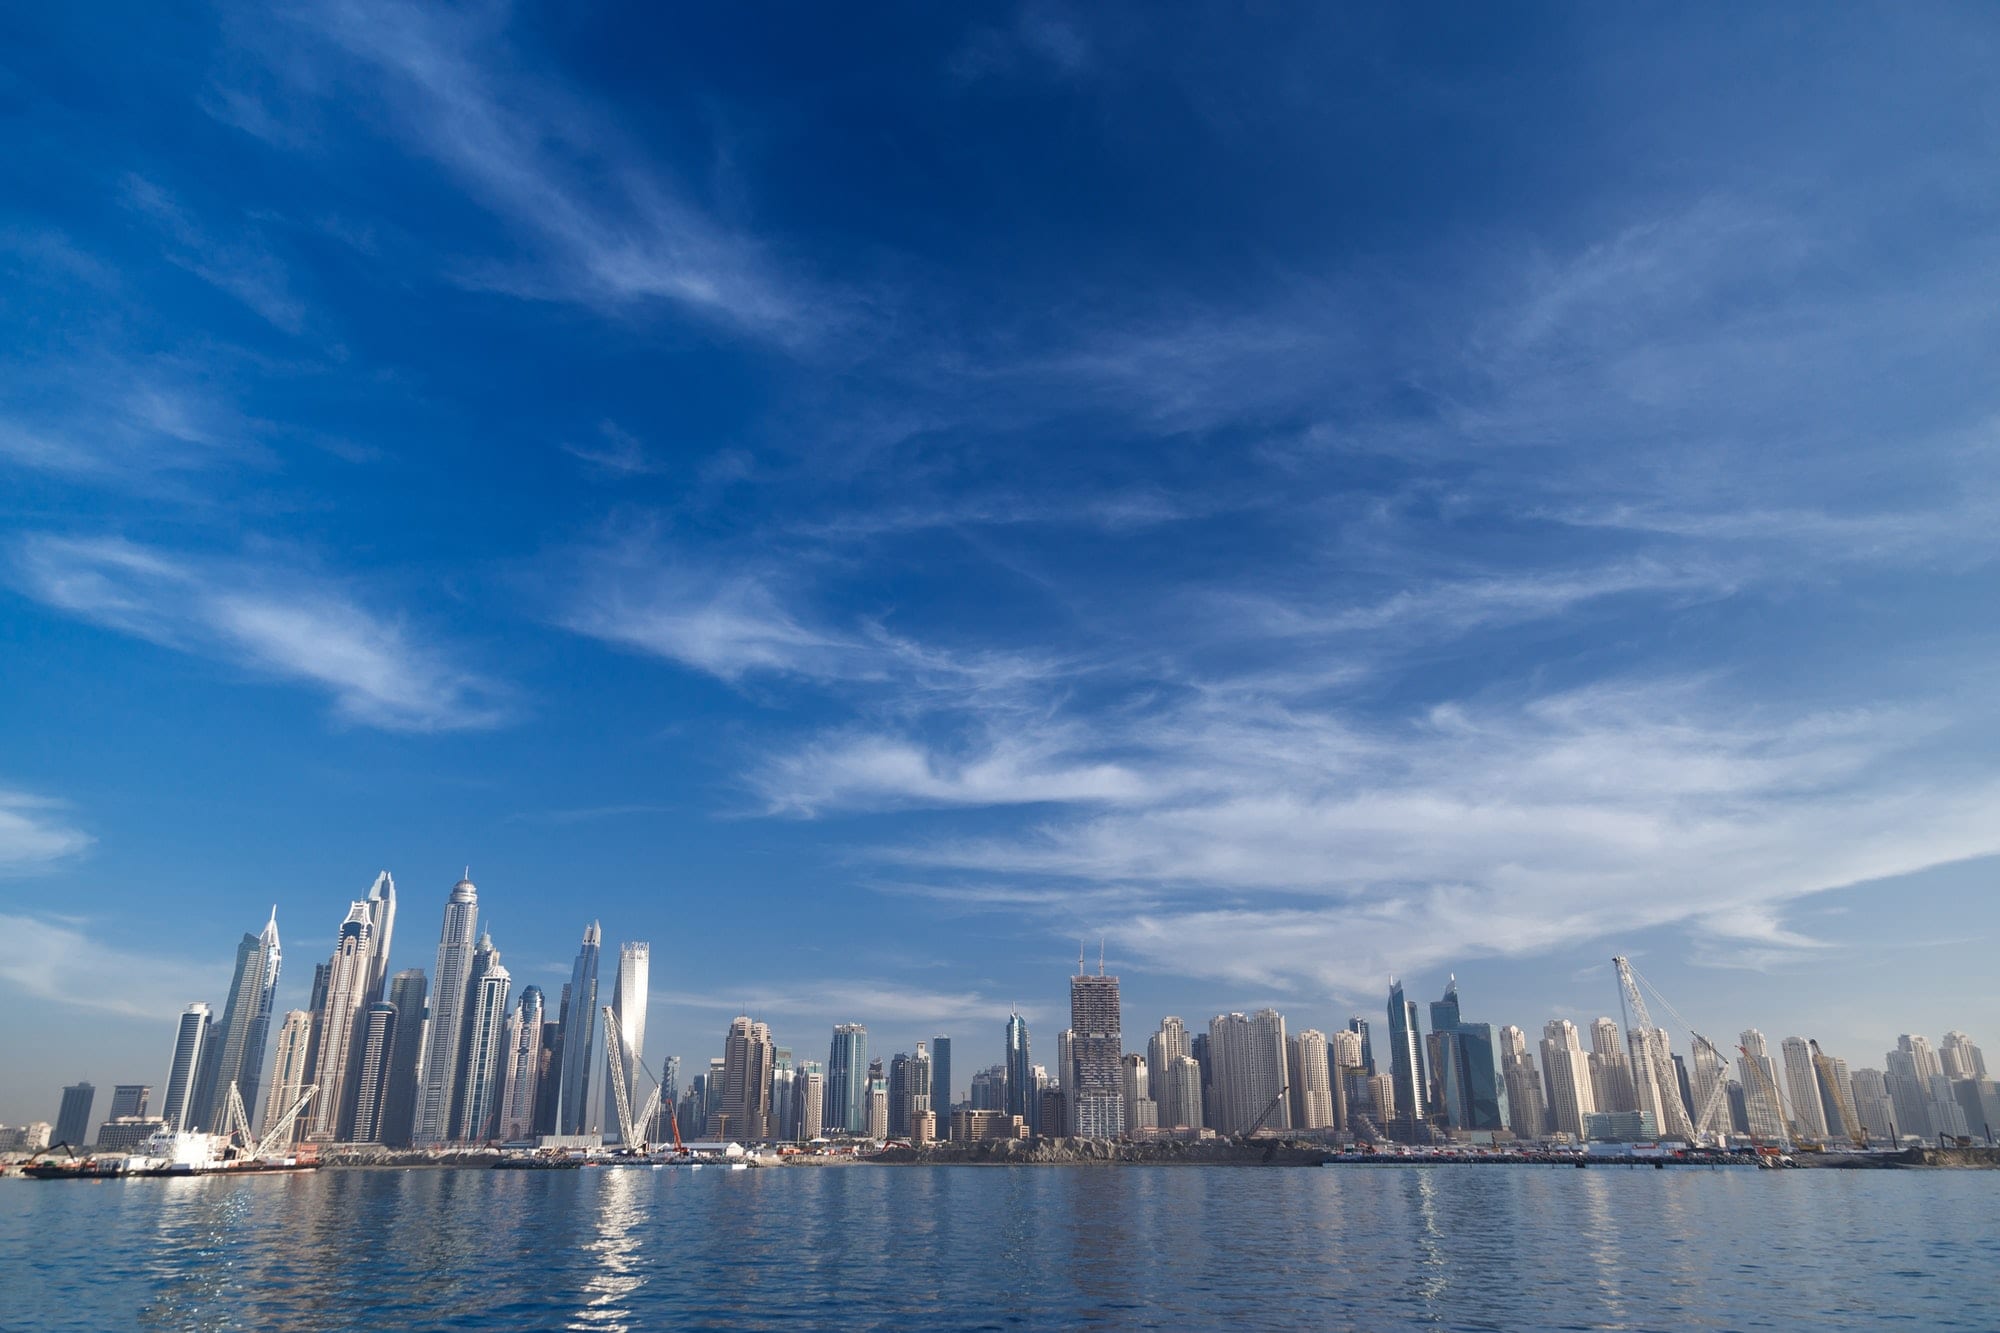 Dubai skyline JBR Jumeirah beach residencies